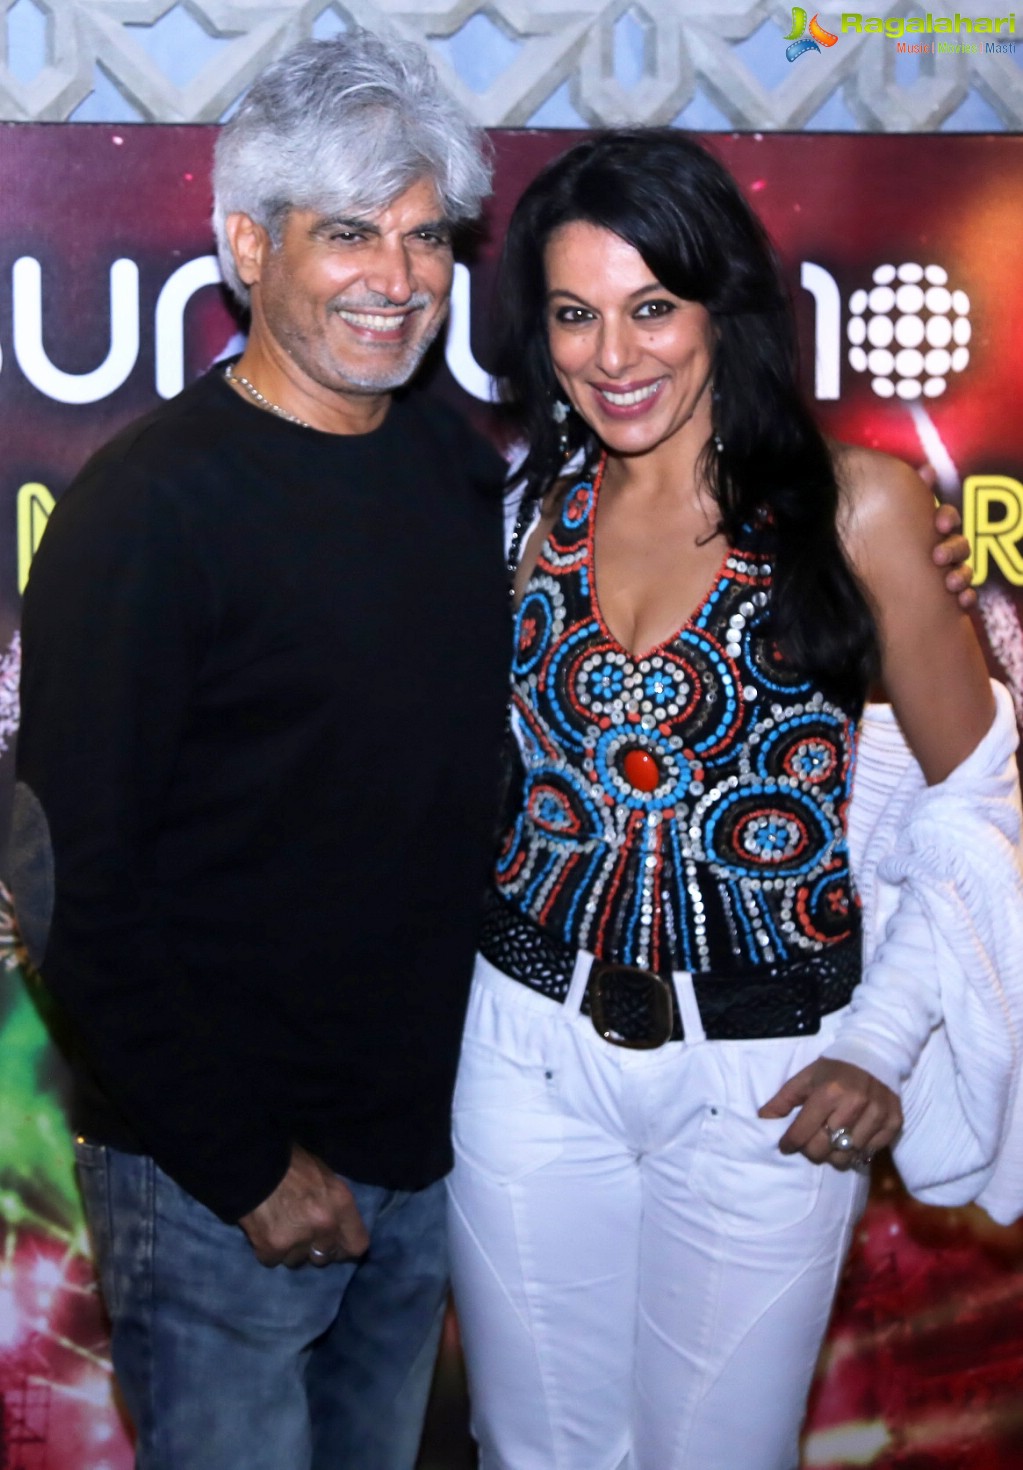 Bollywood Celebs at Sheesha Sky Lounge Launch, Mumbai